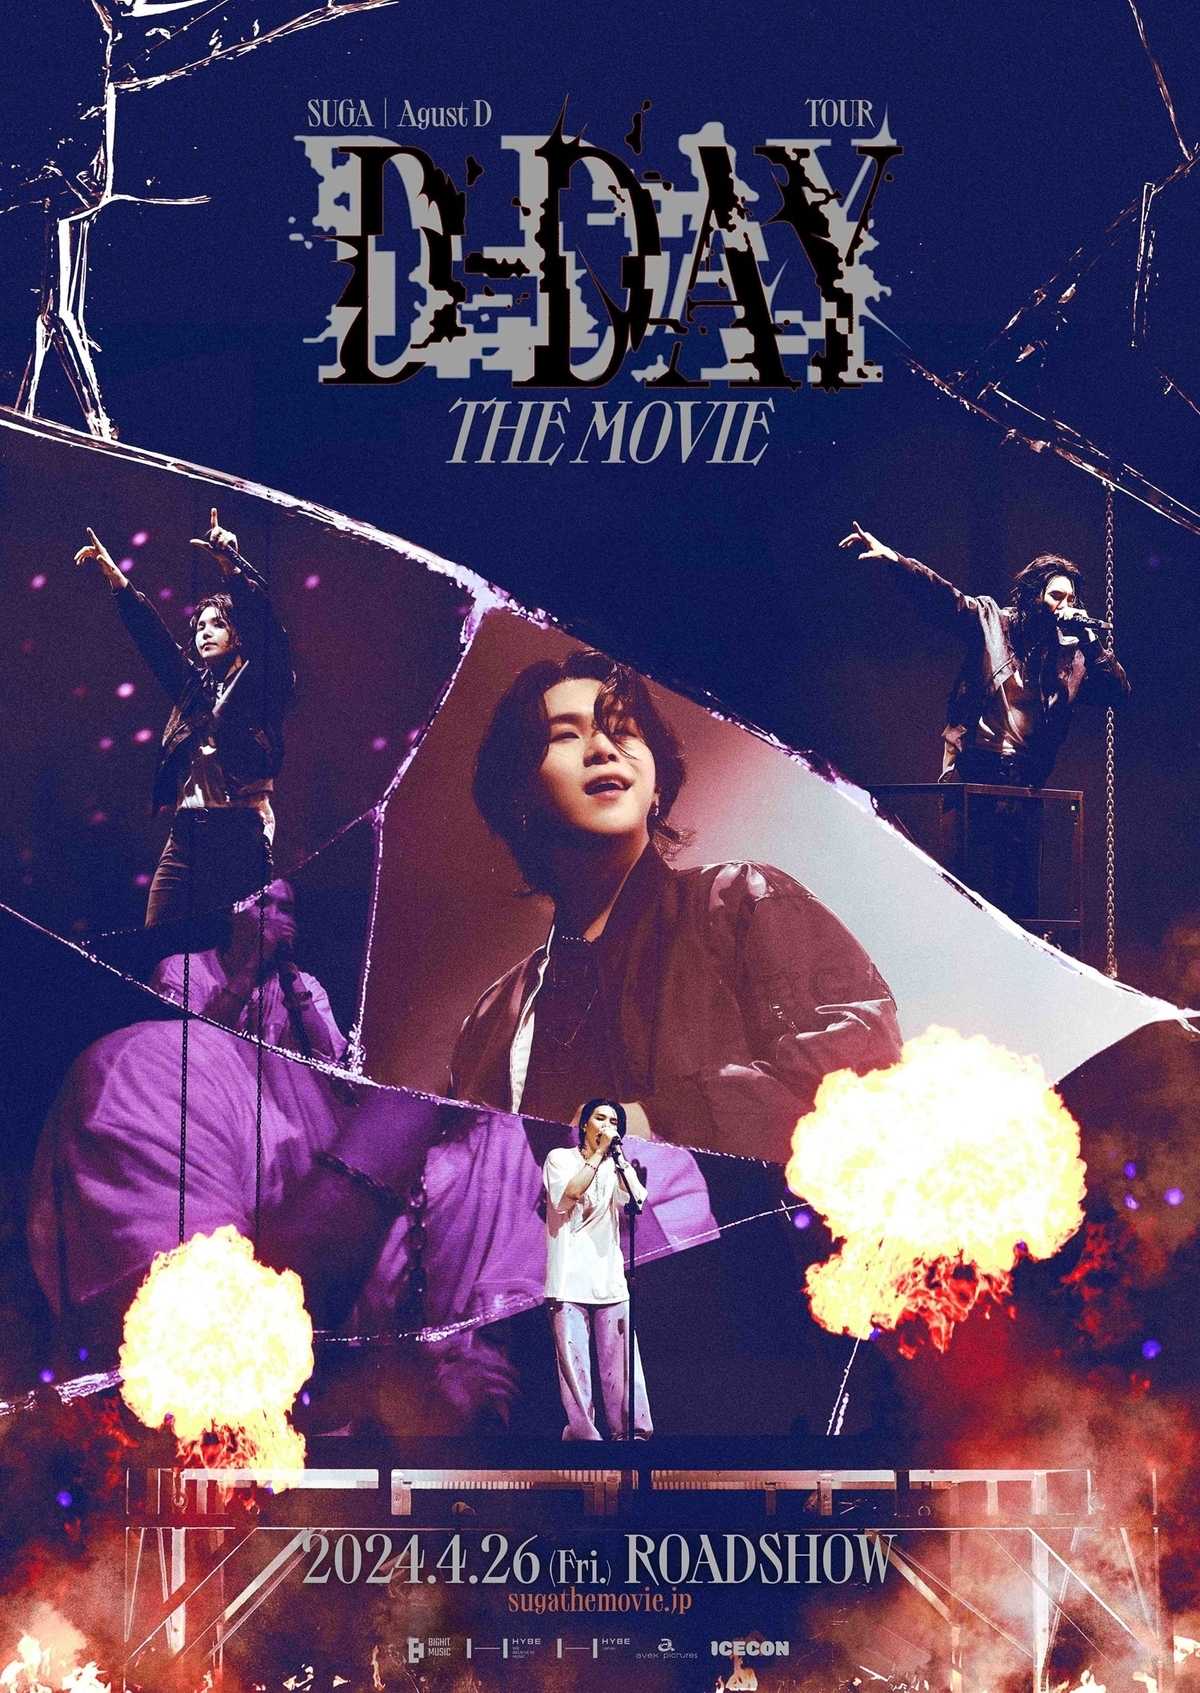 BTSのSUGA、映画「Agust D TOUR 'D-DAY' THE MOVIE」応援上映が追加 